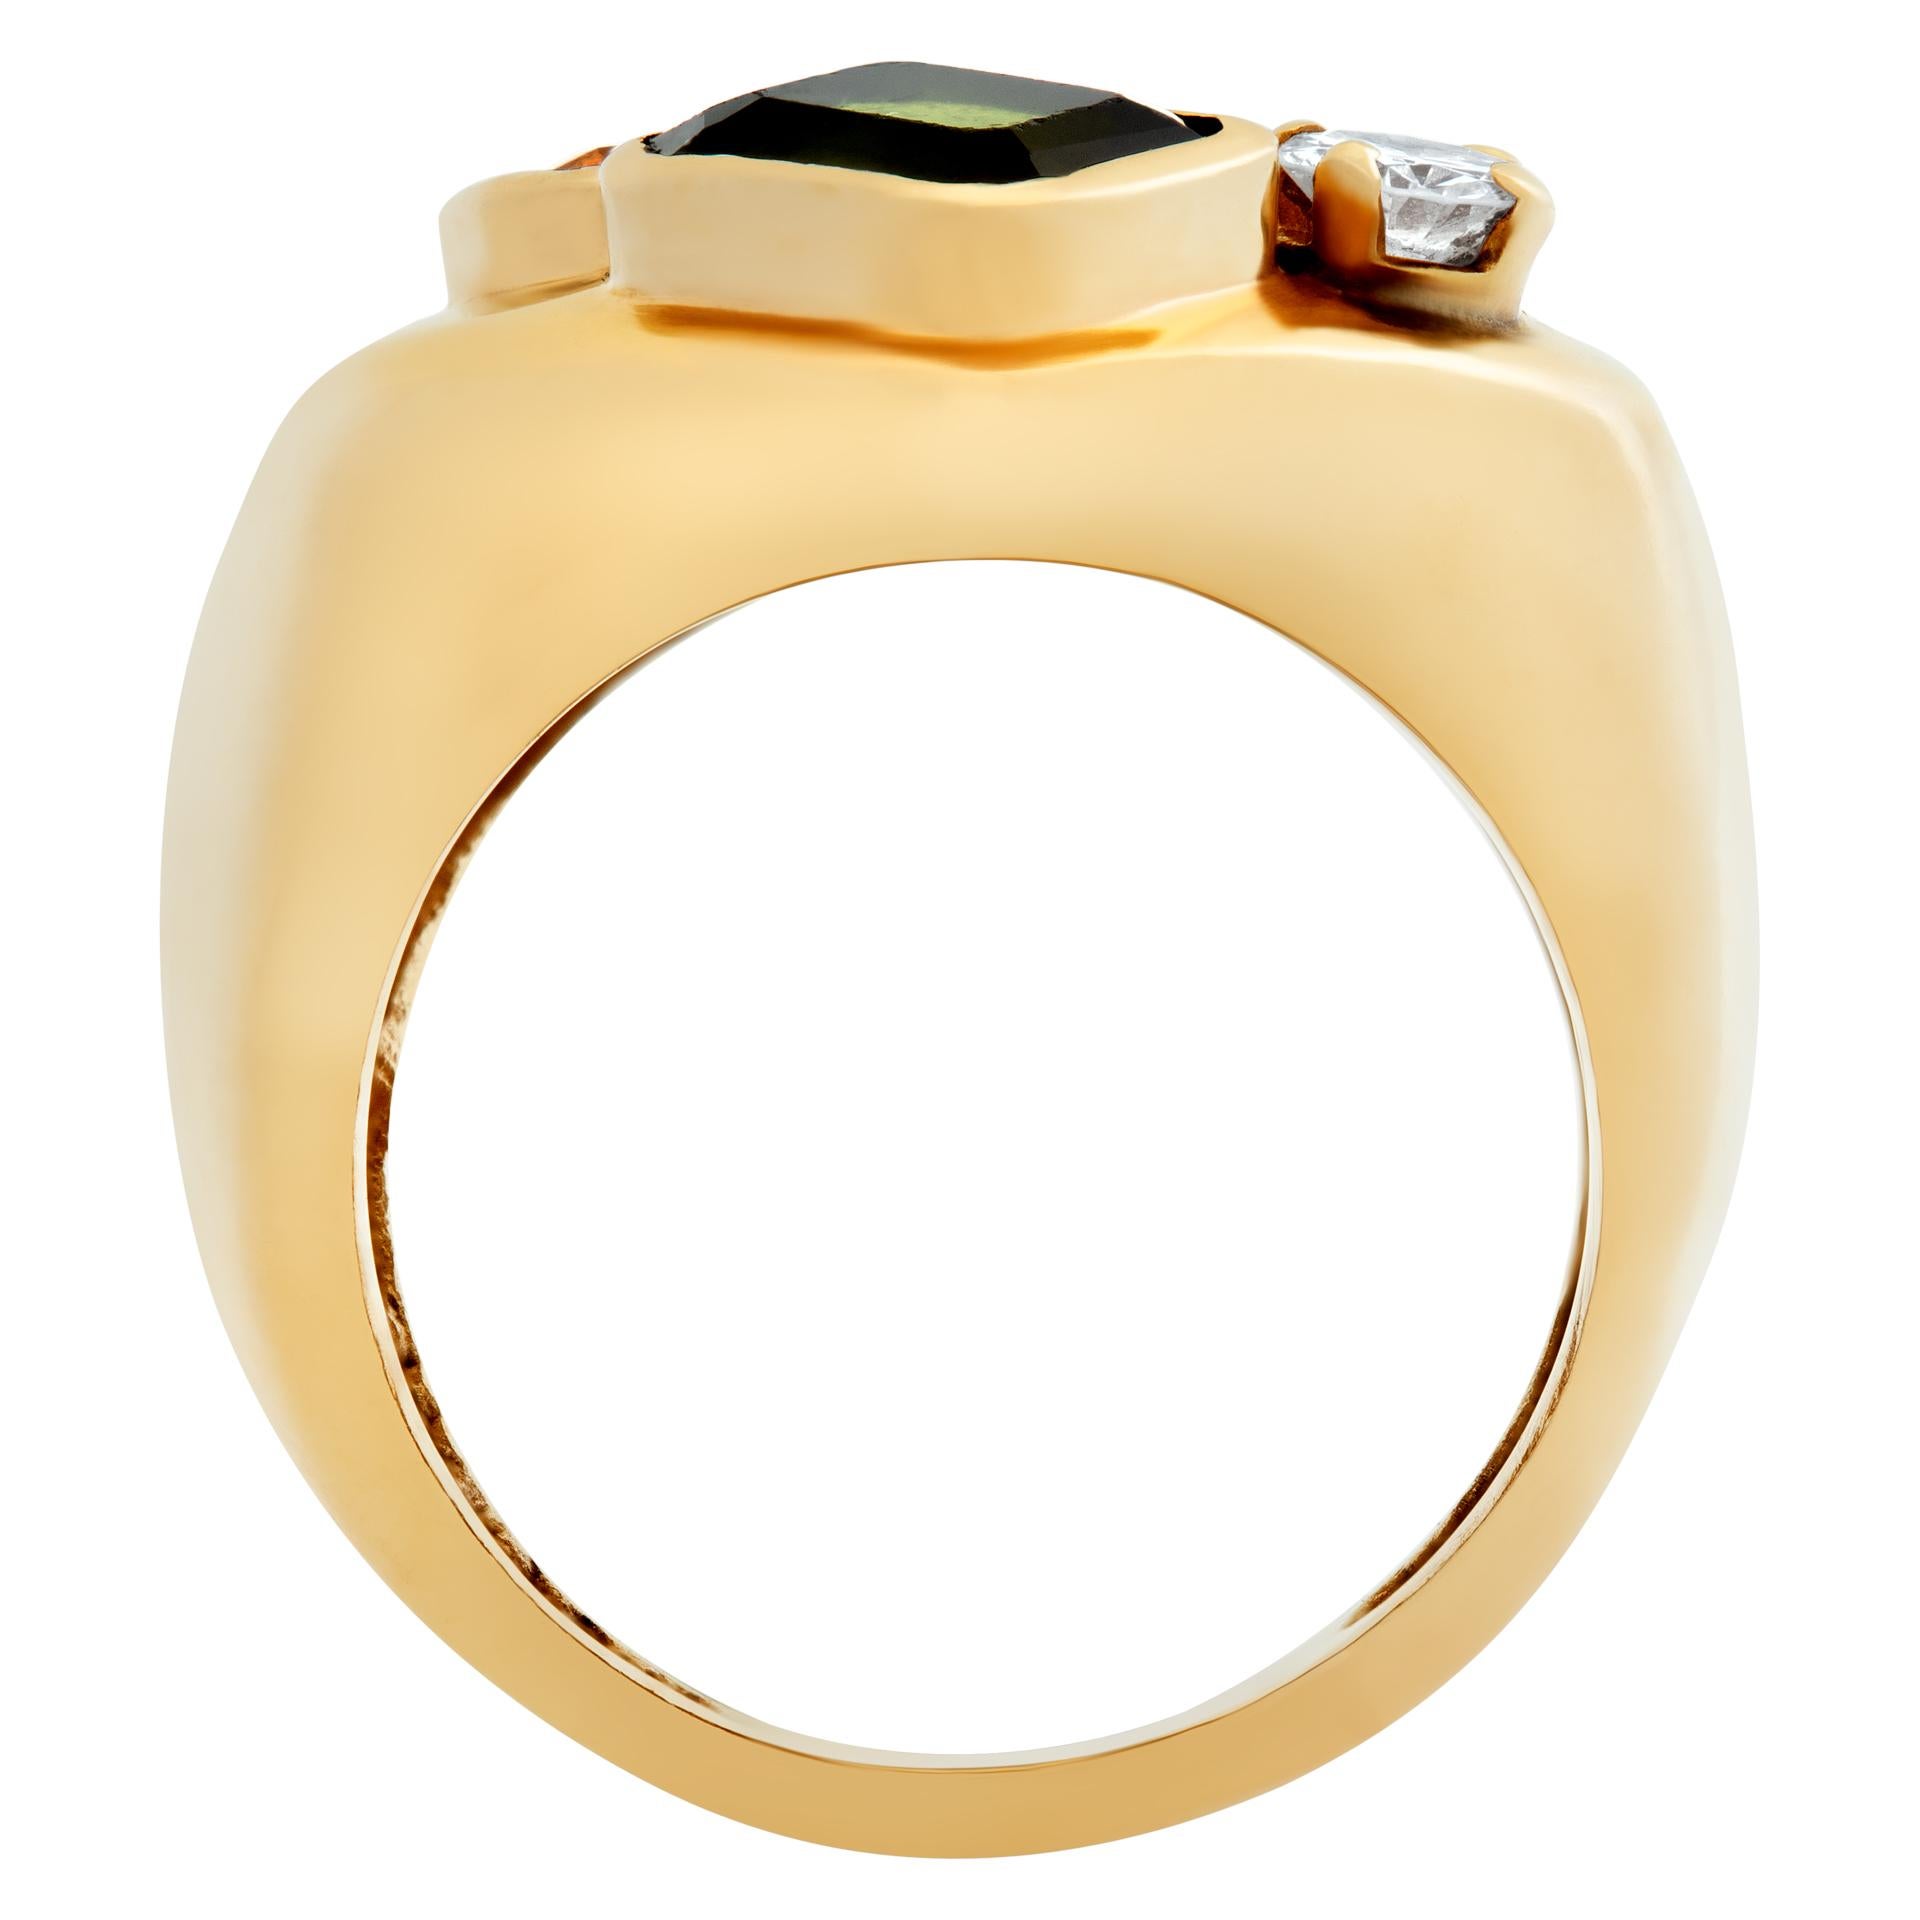 semi precious stones engagement rings